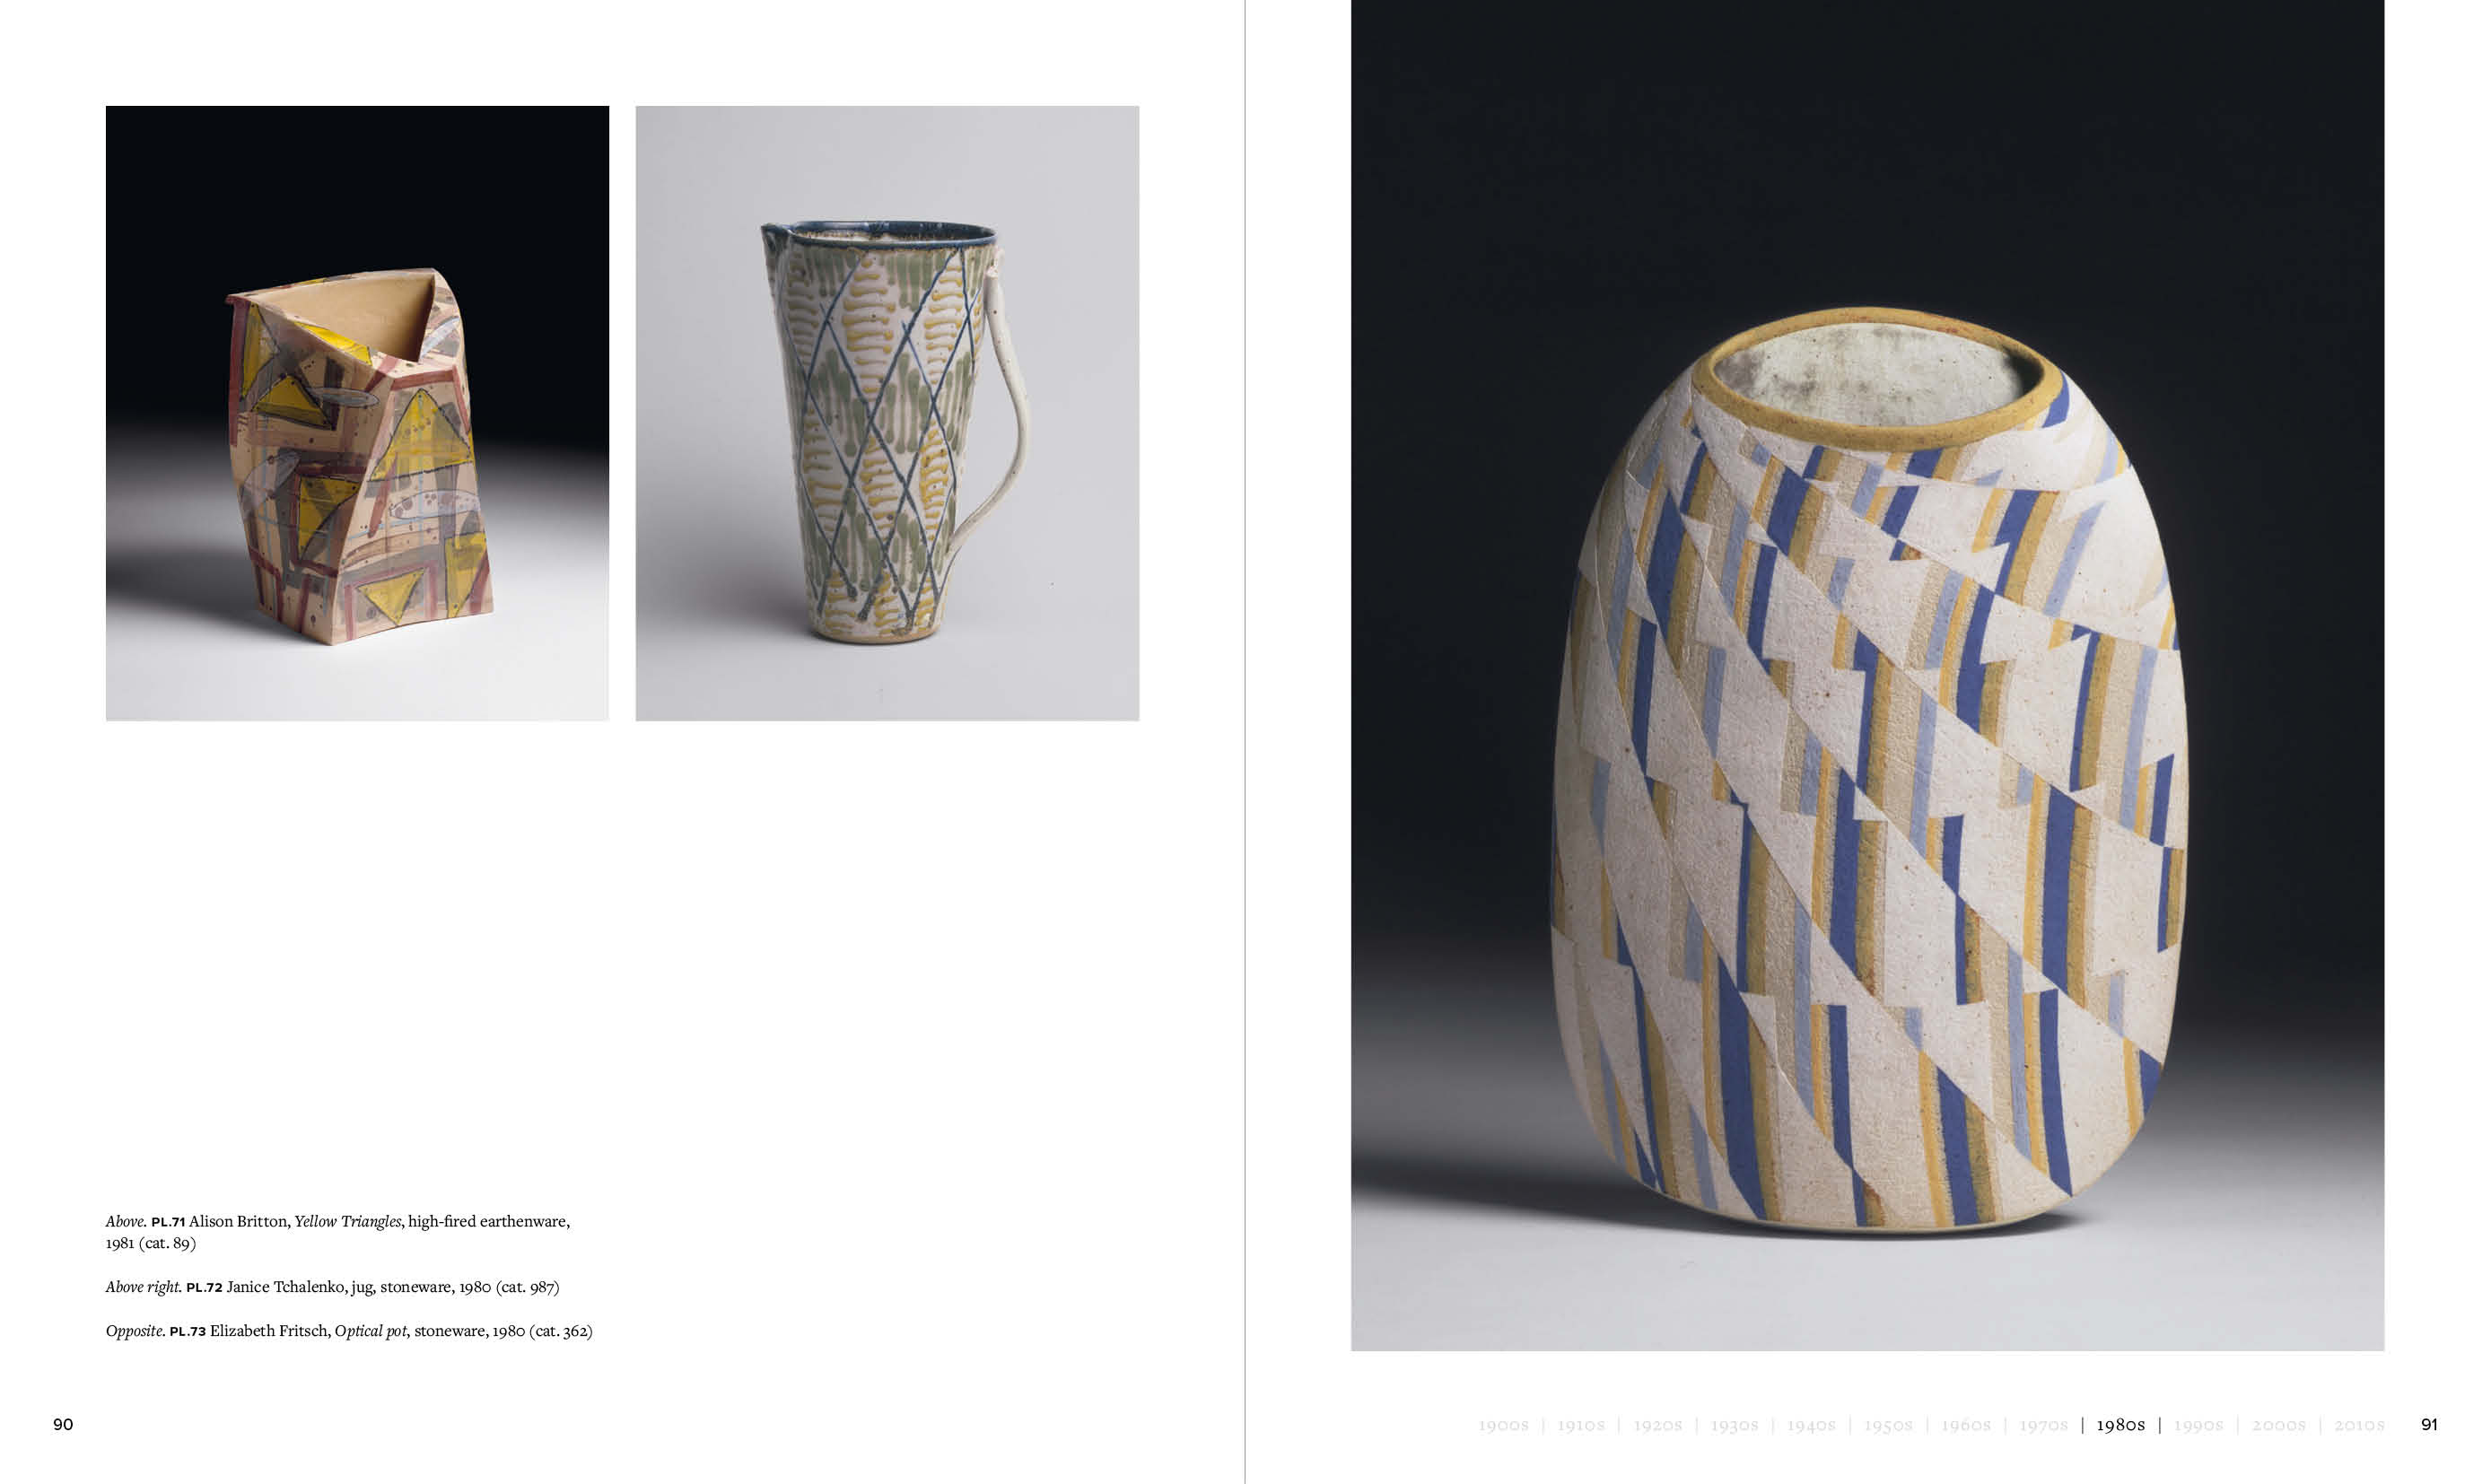 Thames & Hudson USA - Book - Studio Ceramics